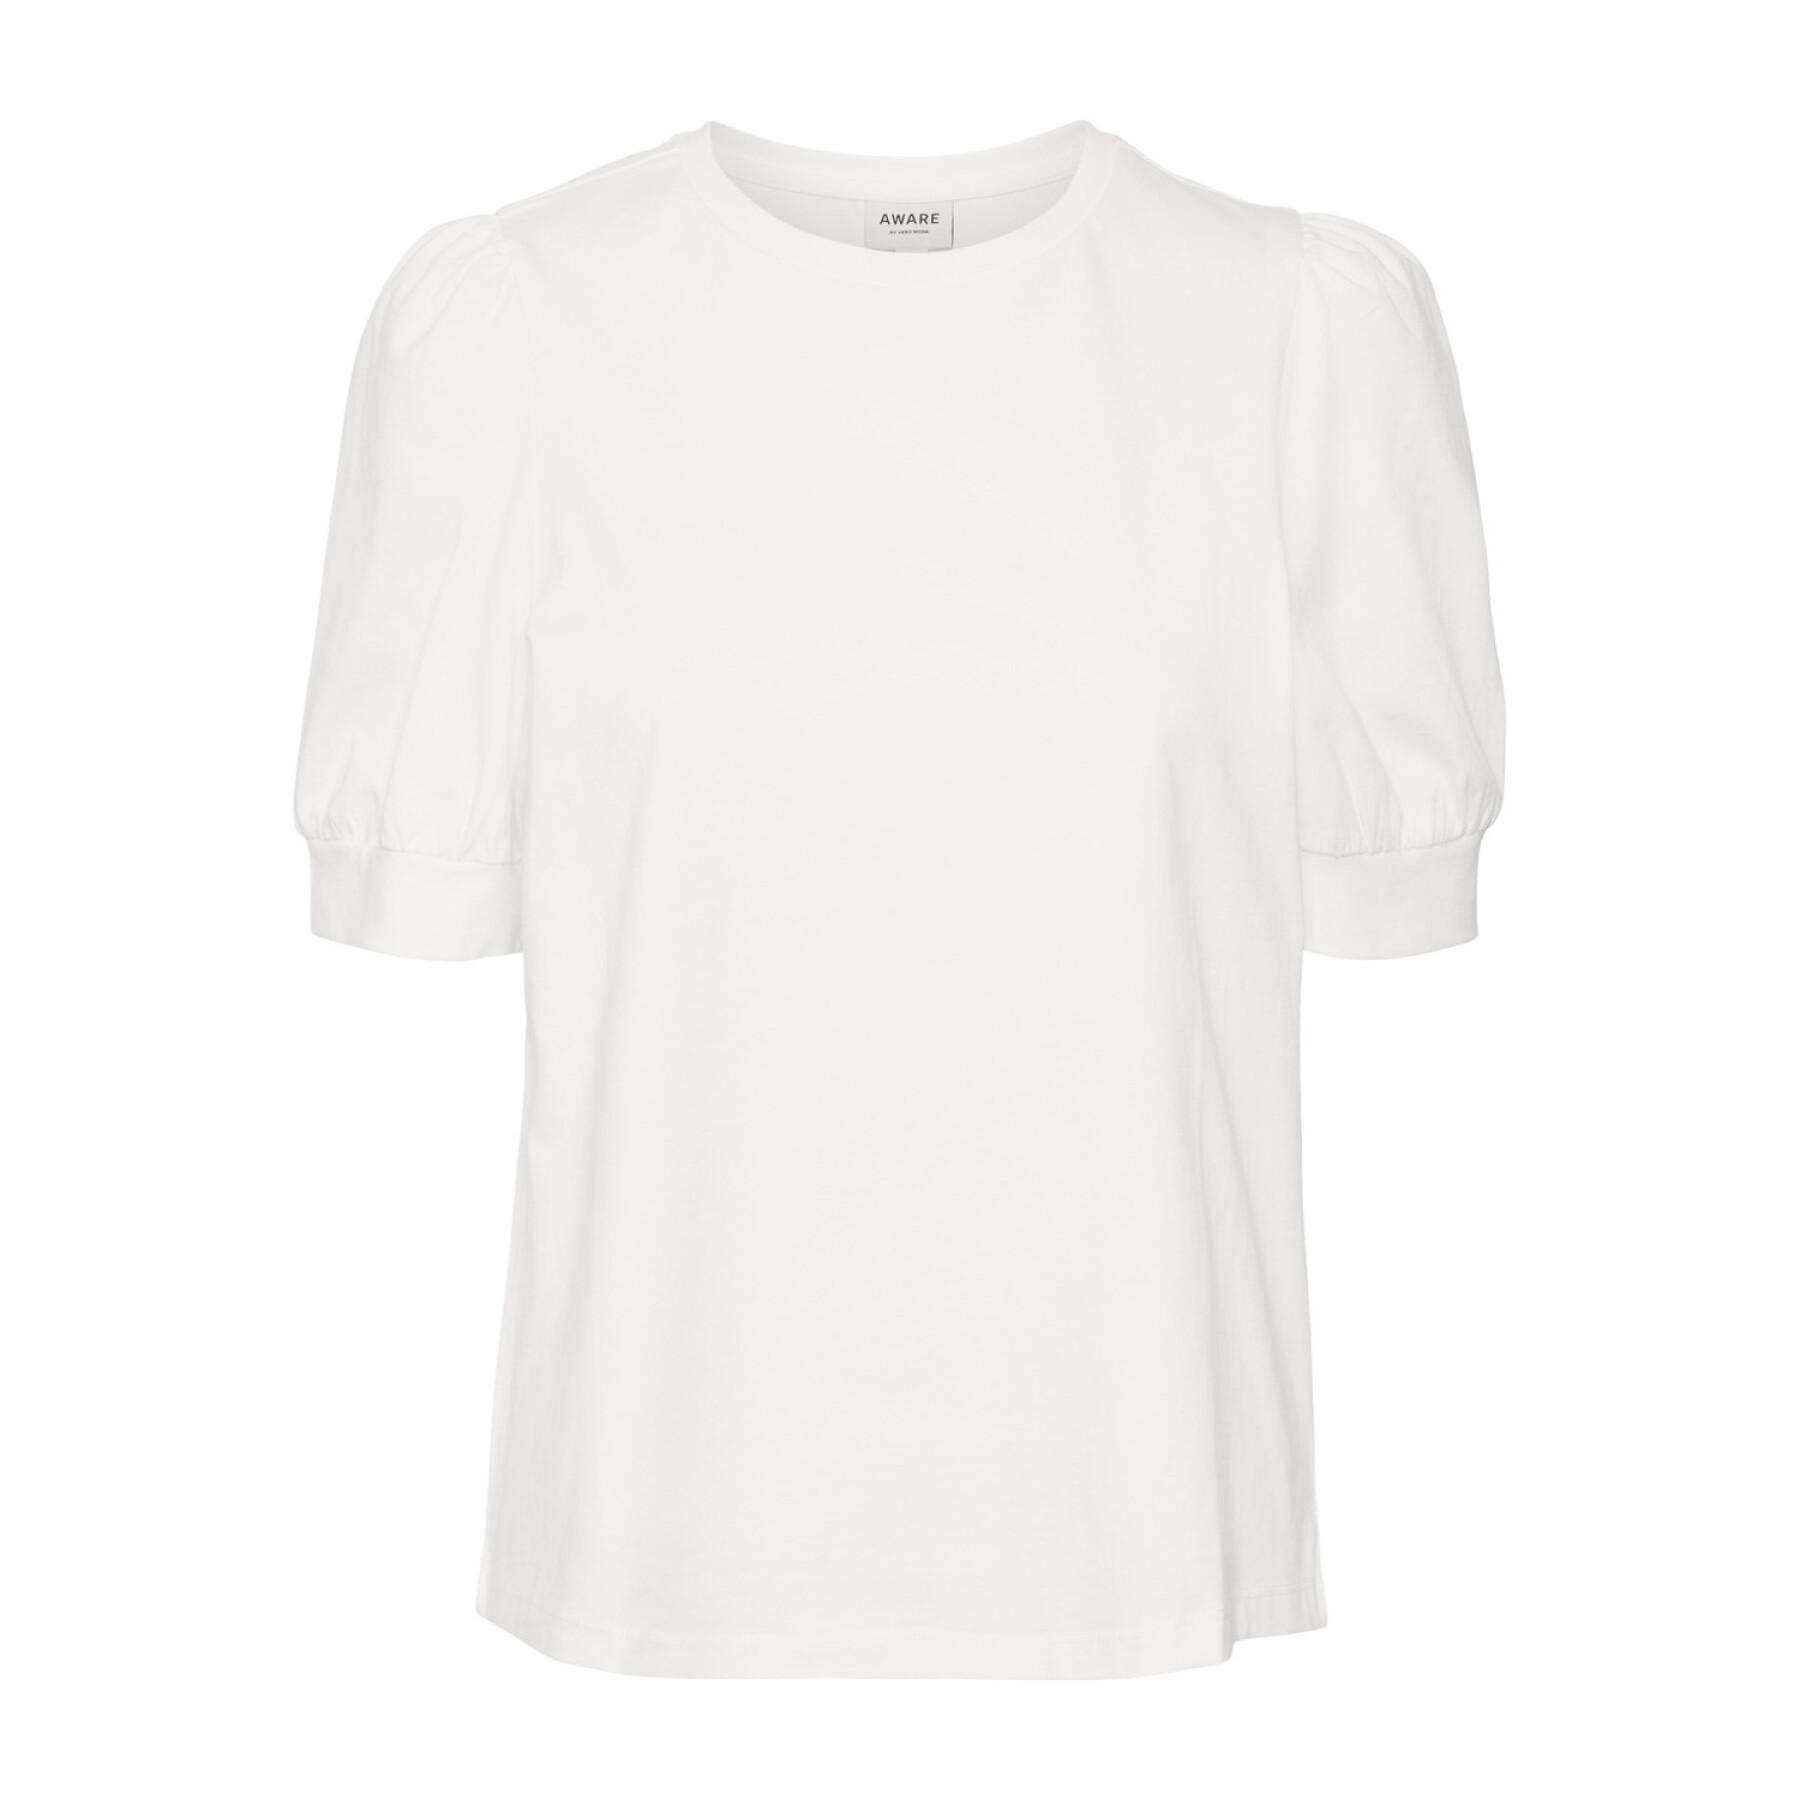 Women's 2/4 sleeve T-shirt Vero Moda Kerry